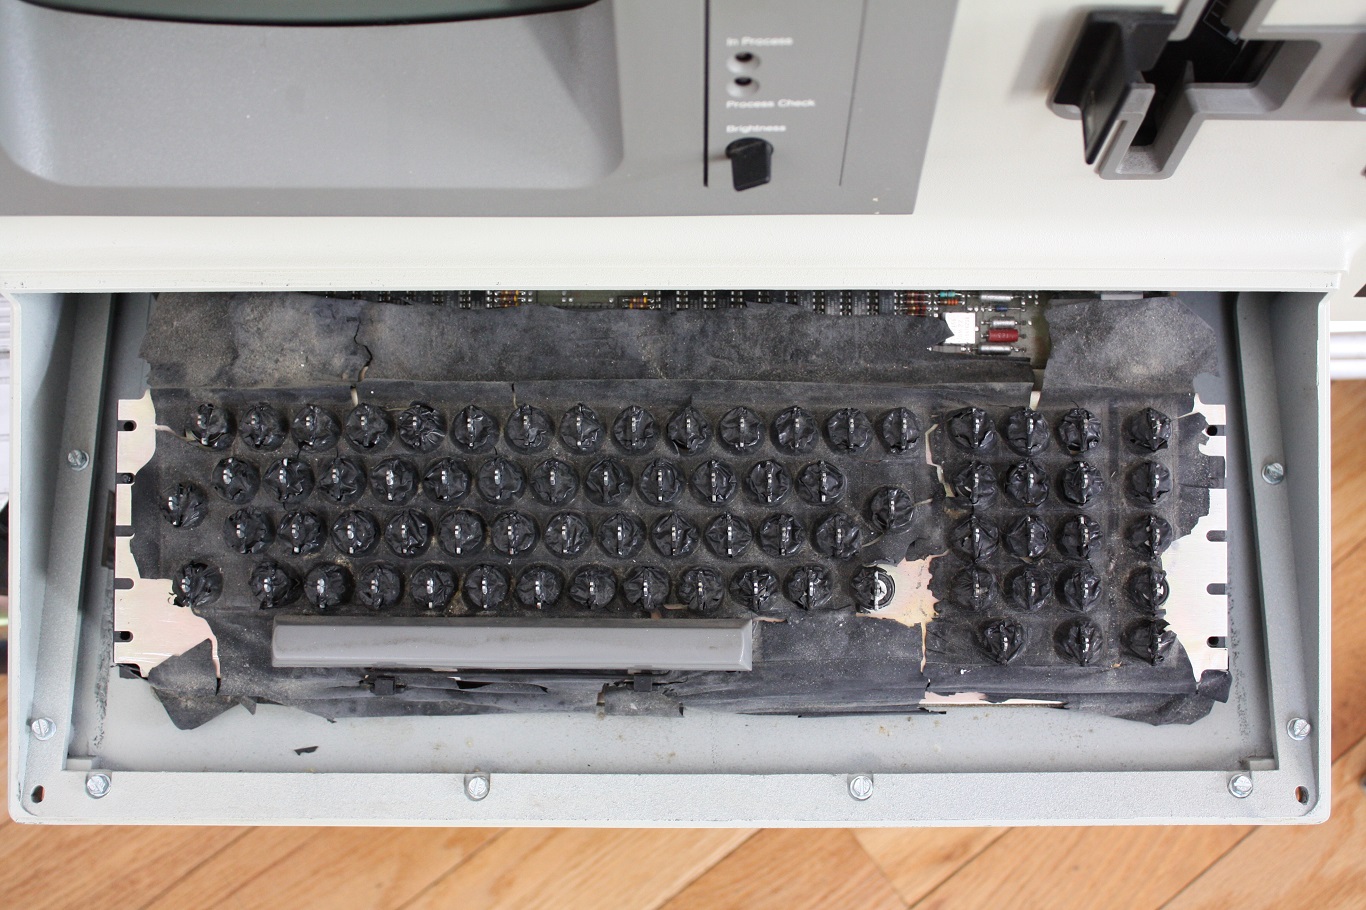 IBM 5120 - keyboard membrane top view